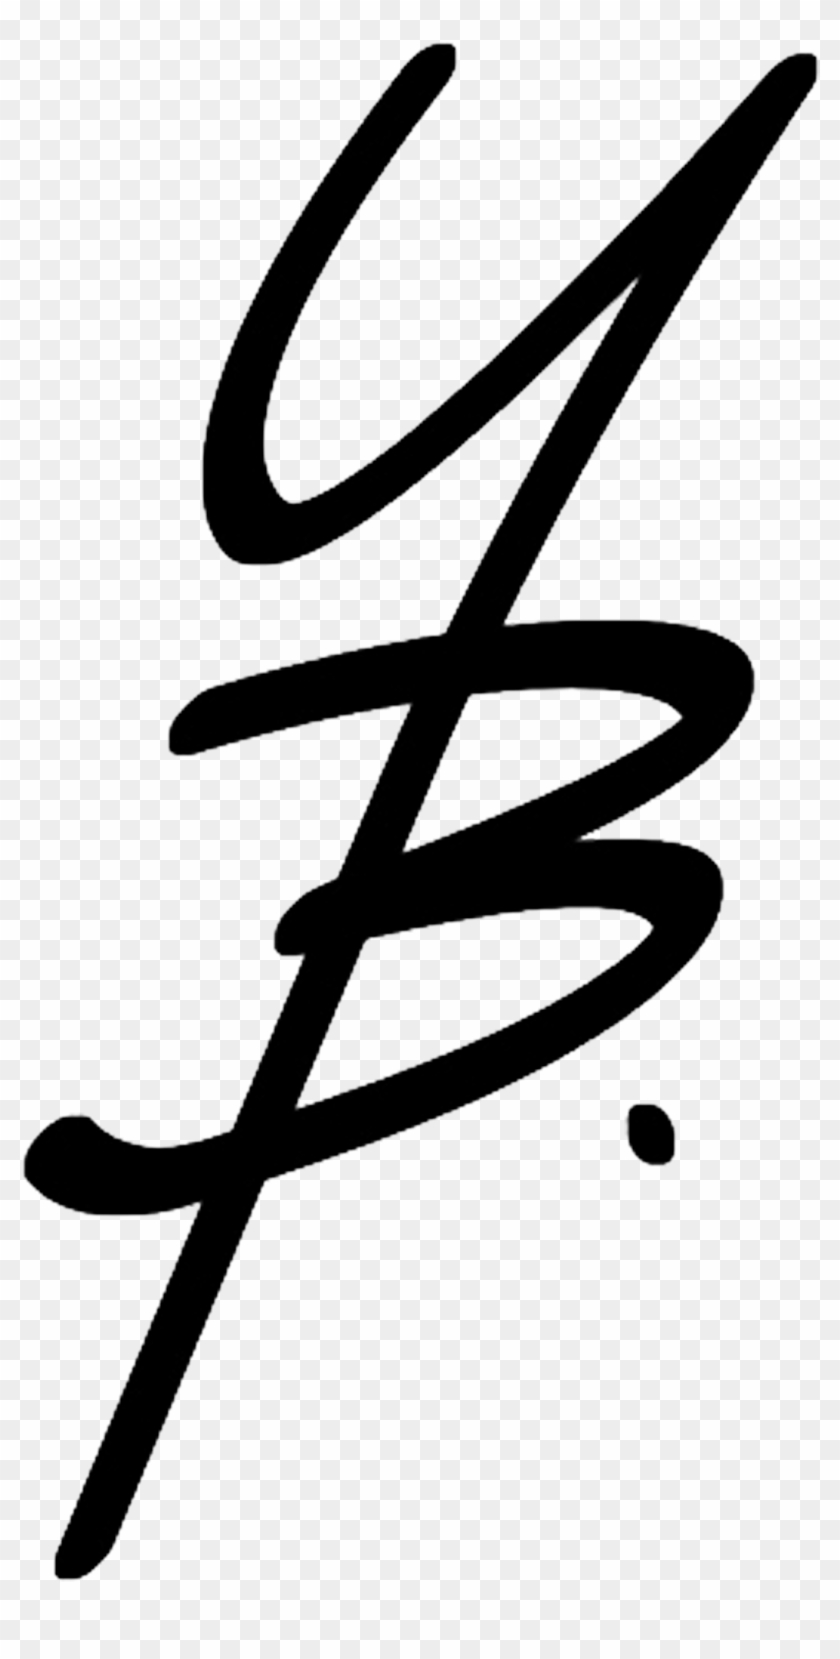 Yb logo monogram shield shape with crown design Vector Image